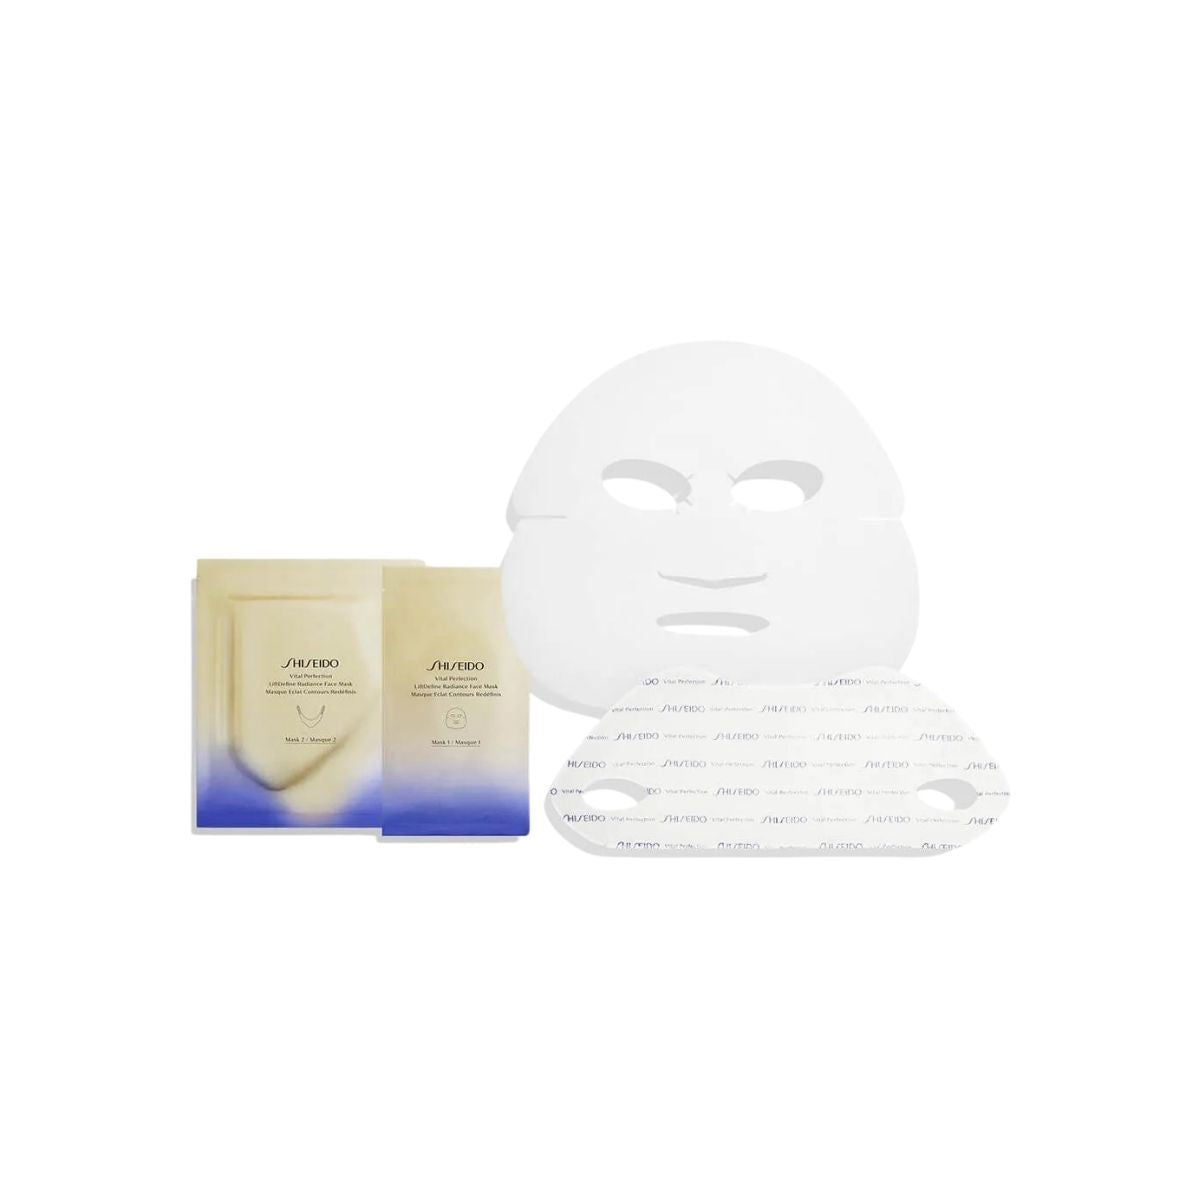 Shiseido Vital Perfection LiftDefine Radiance Face Mask 6pcs